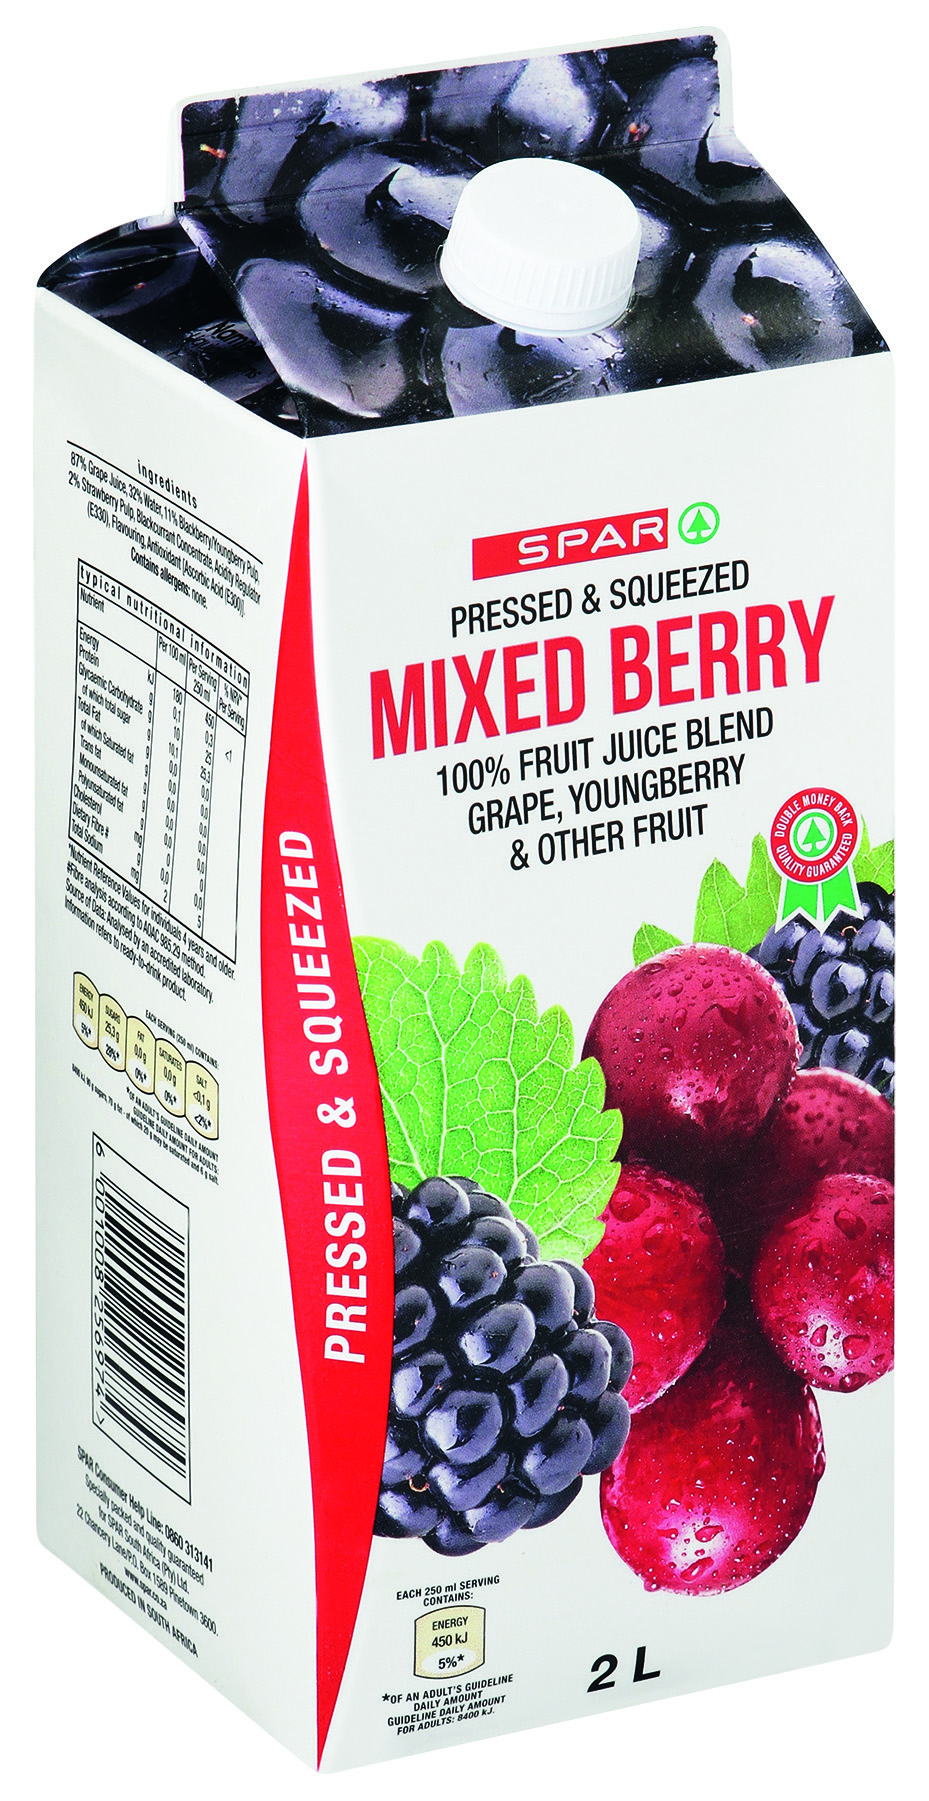 100% fruit juice - mixed berry